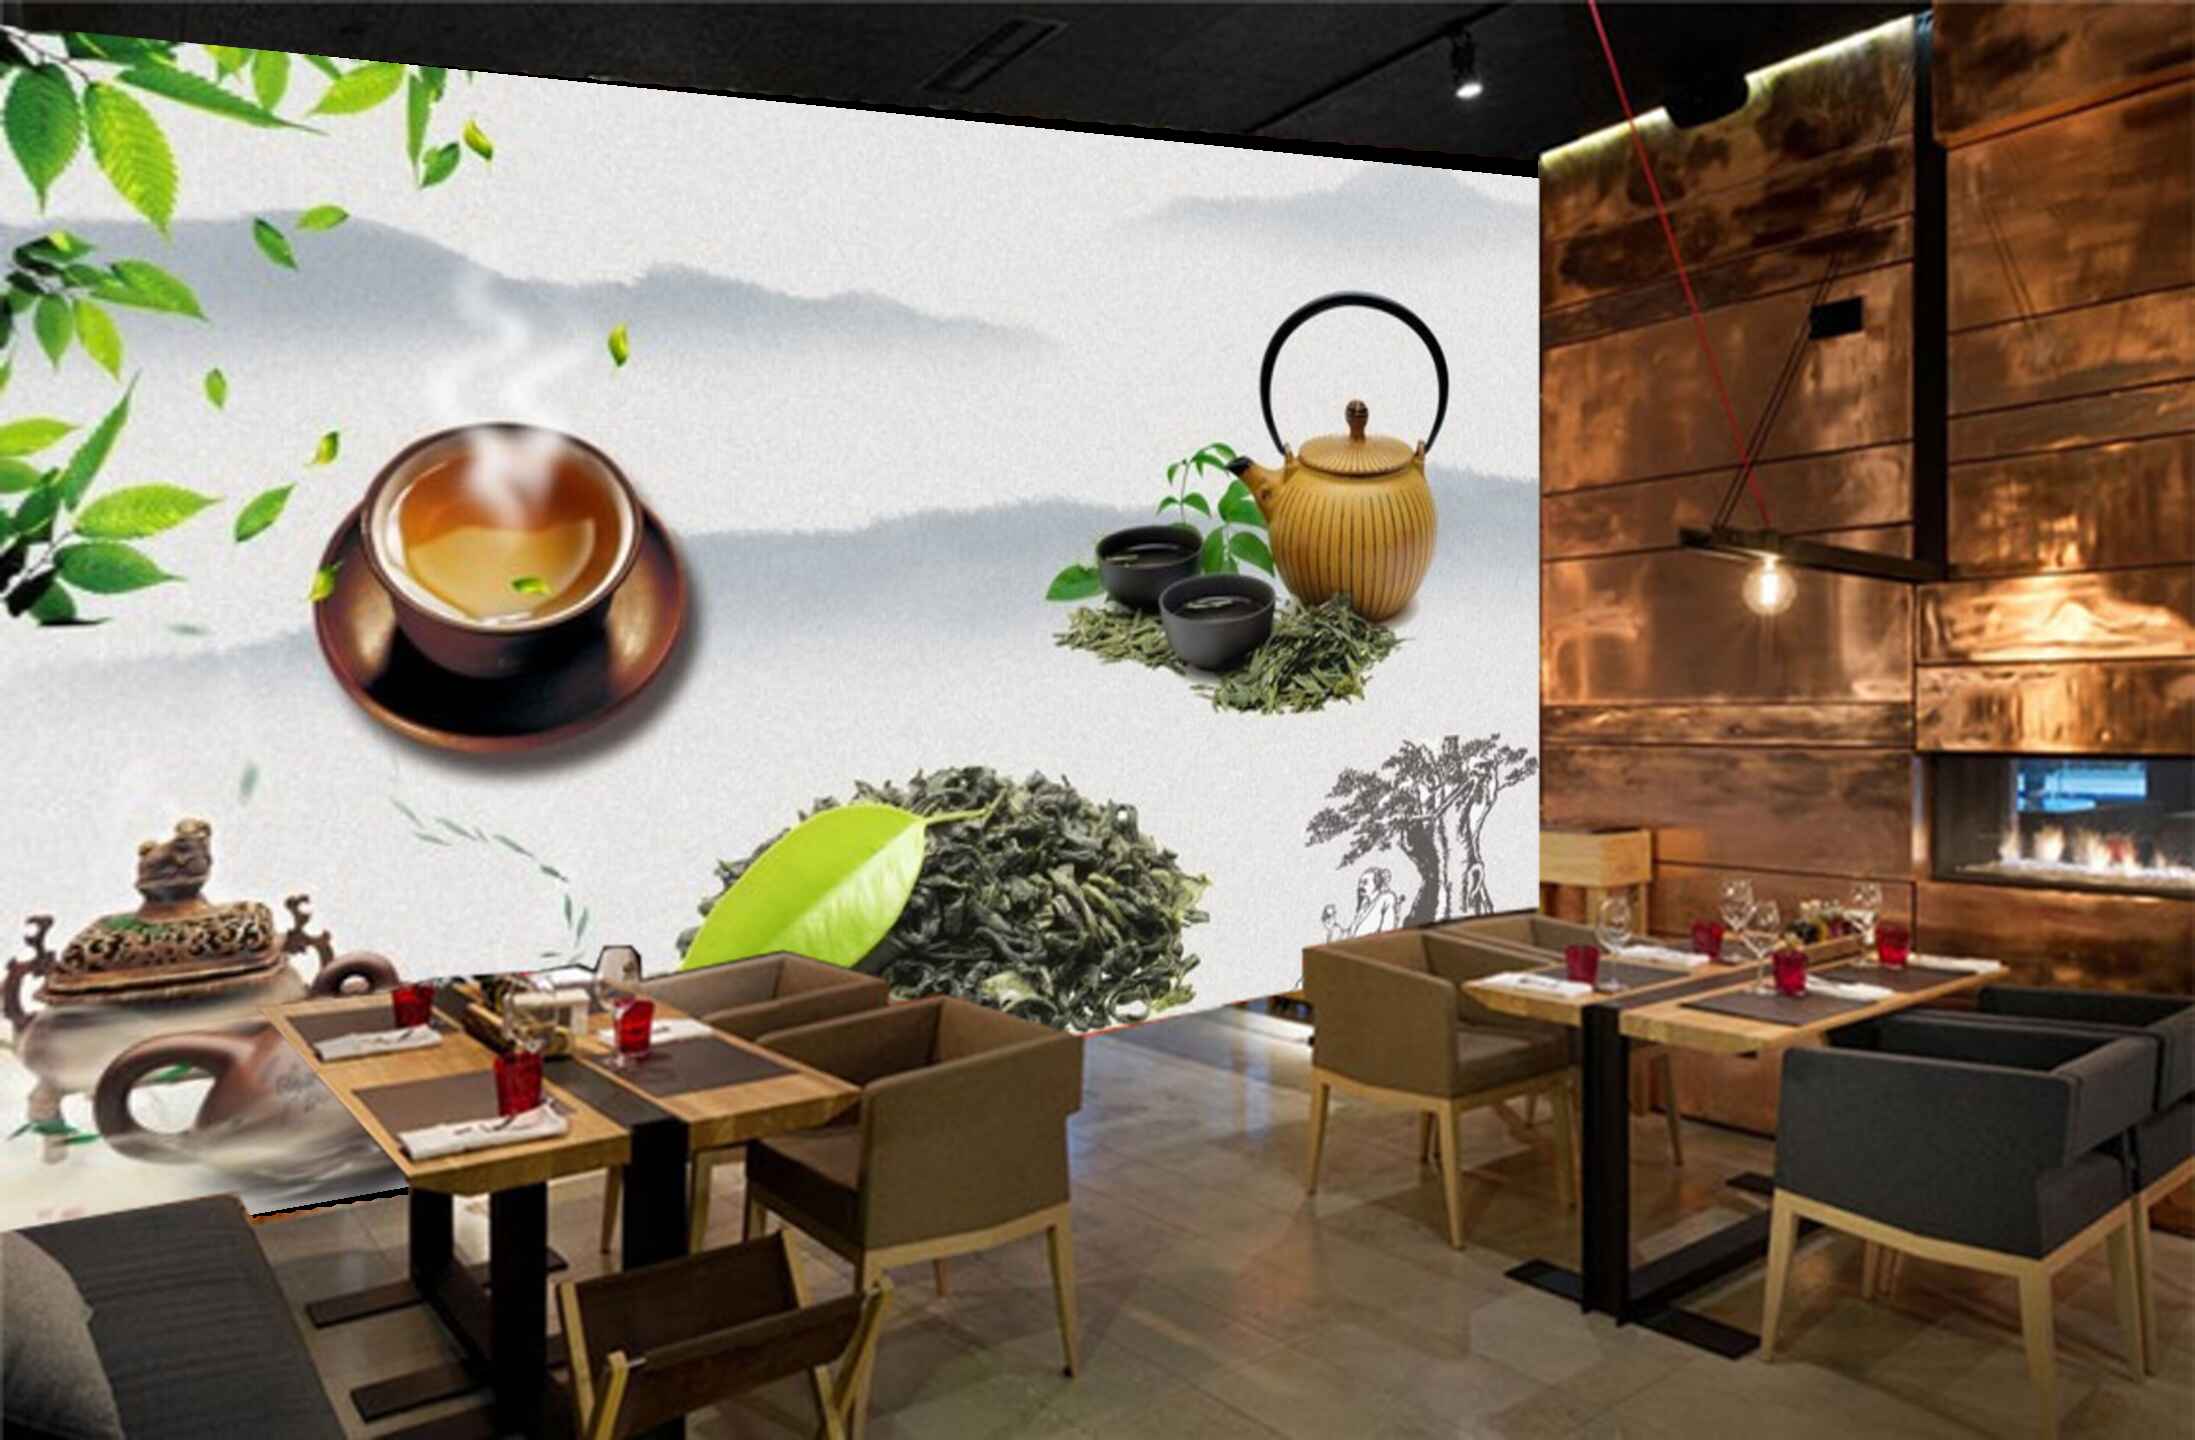 Avikalp MWZ3107 Coffeee Tea Leaves Mug Cups HD Wallpaper for Cafe Restaurant